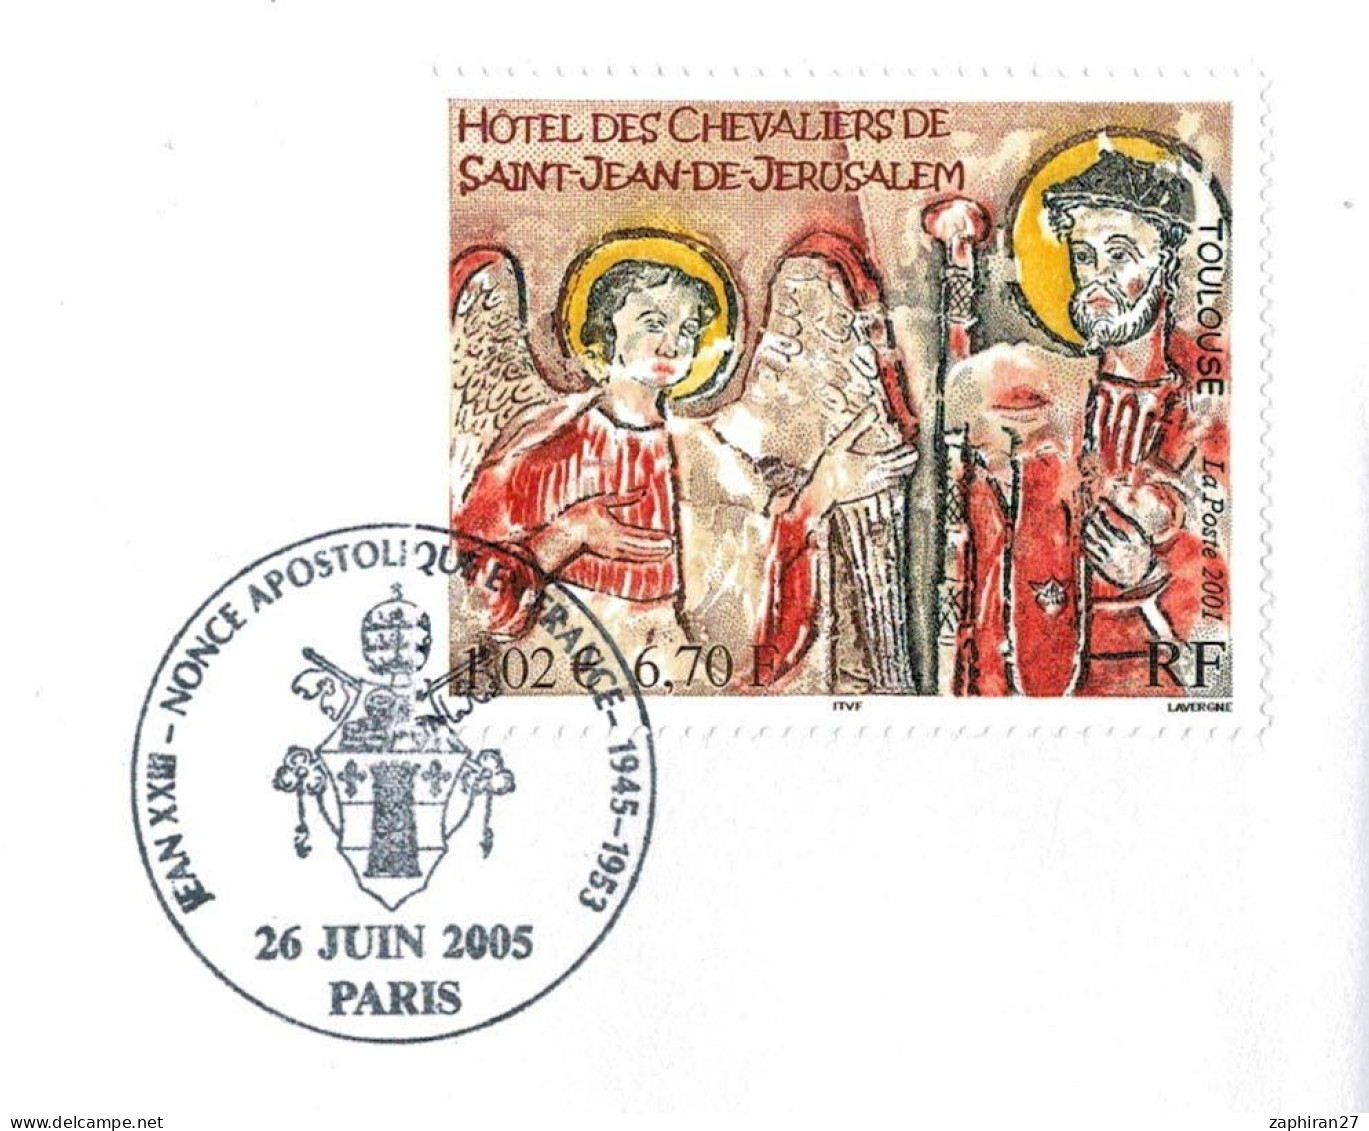 CHRISTIANISME : JEAN XXIII NONCE APOSTOLIQUE EN FRANCE 1945-1953  (26-6-2005) #694# - Christianity